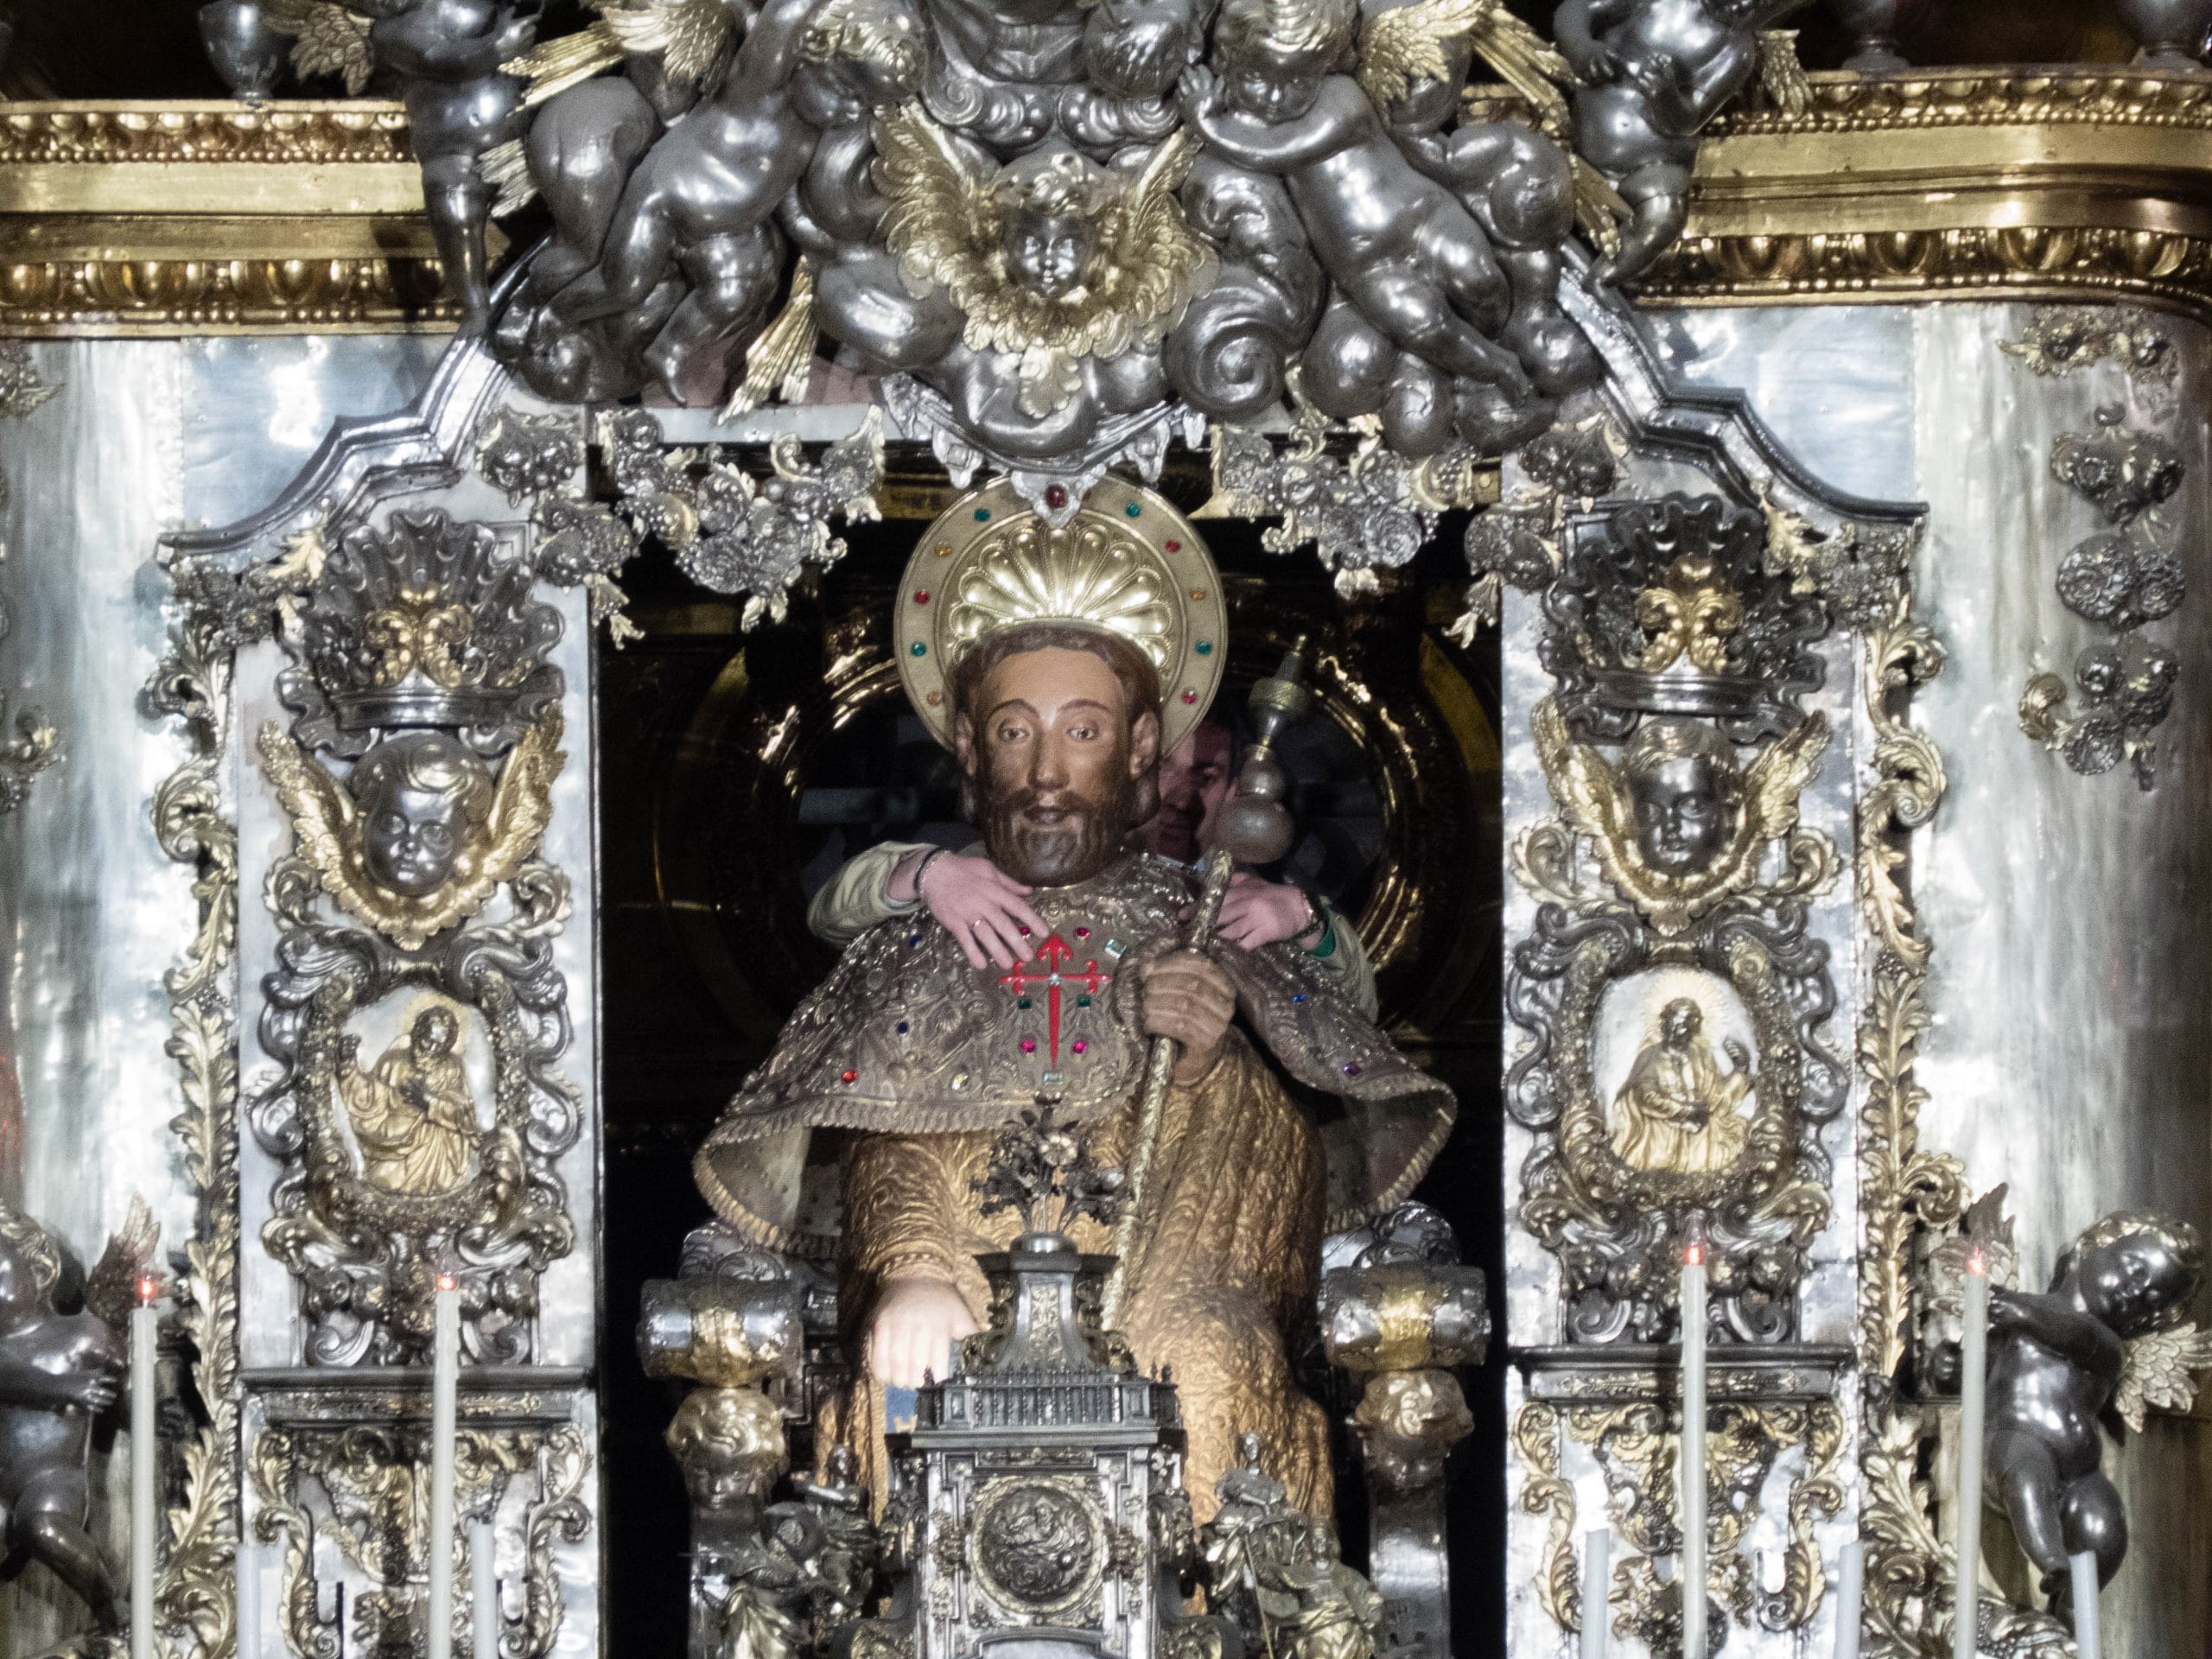 Santiago de Compostela, the end point of Camino Frances